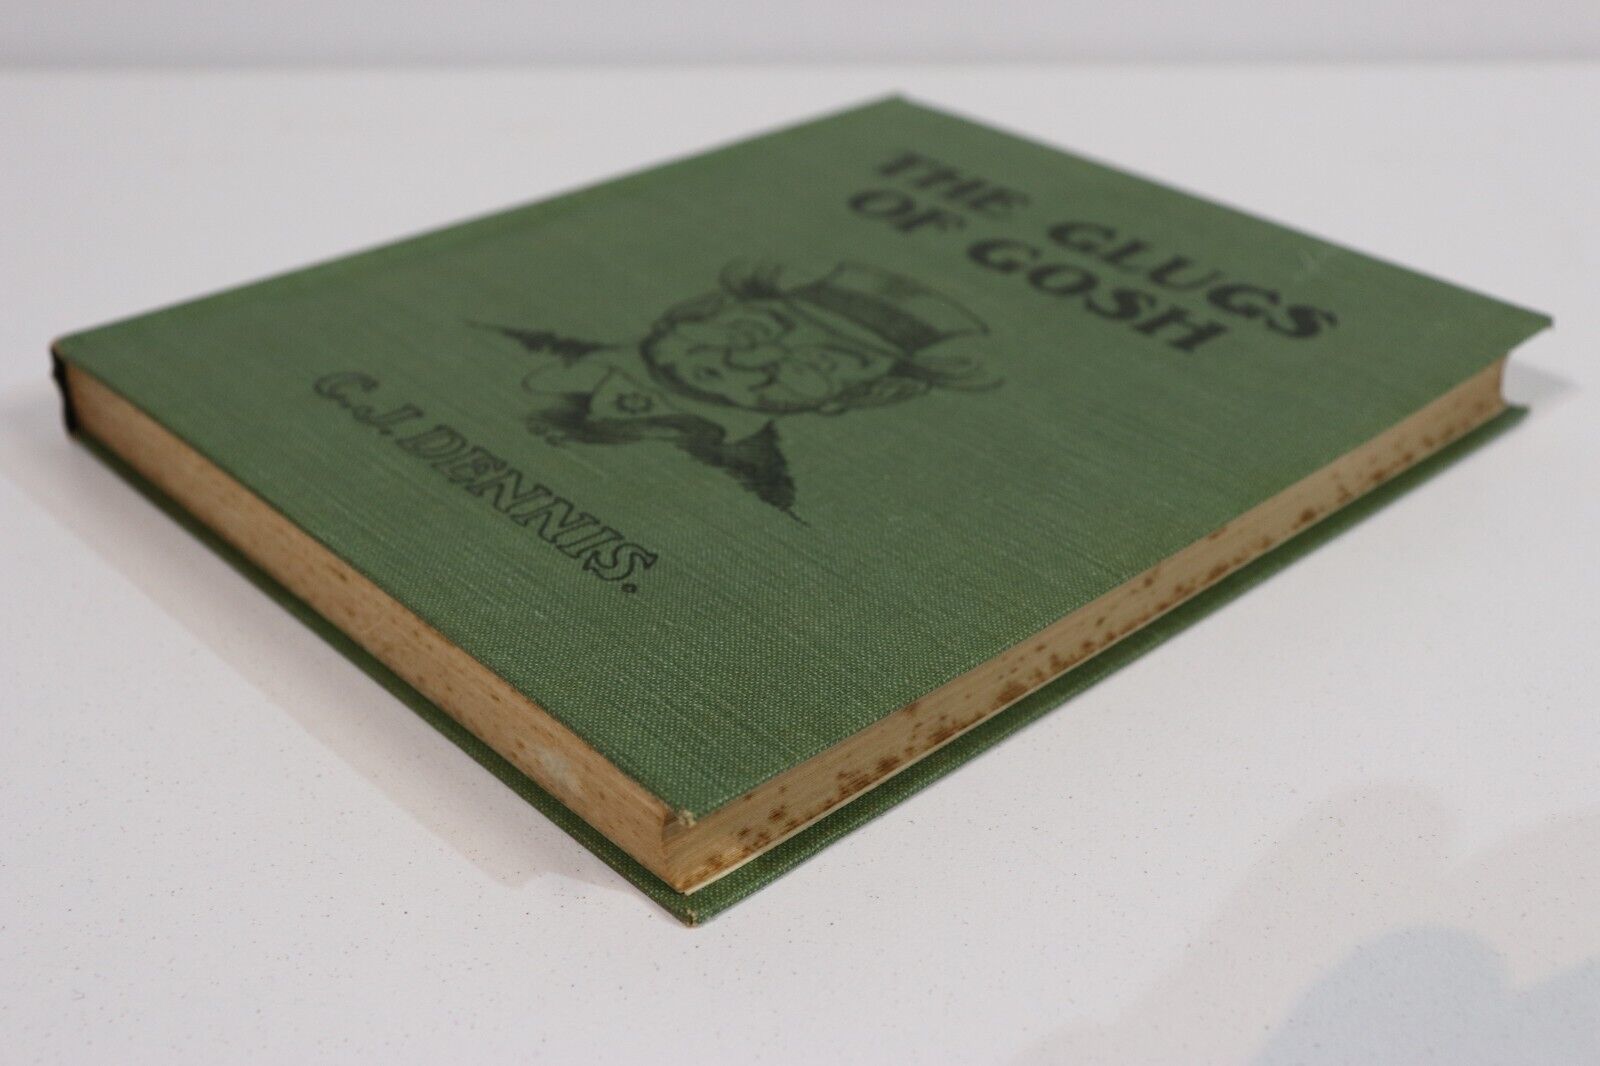 The Glugs Of Gosh by CJ Dennis - 1917 - 1st Edition Australian Literature Book